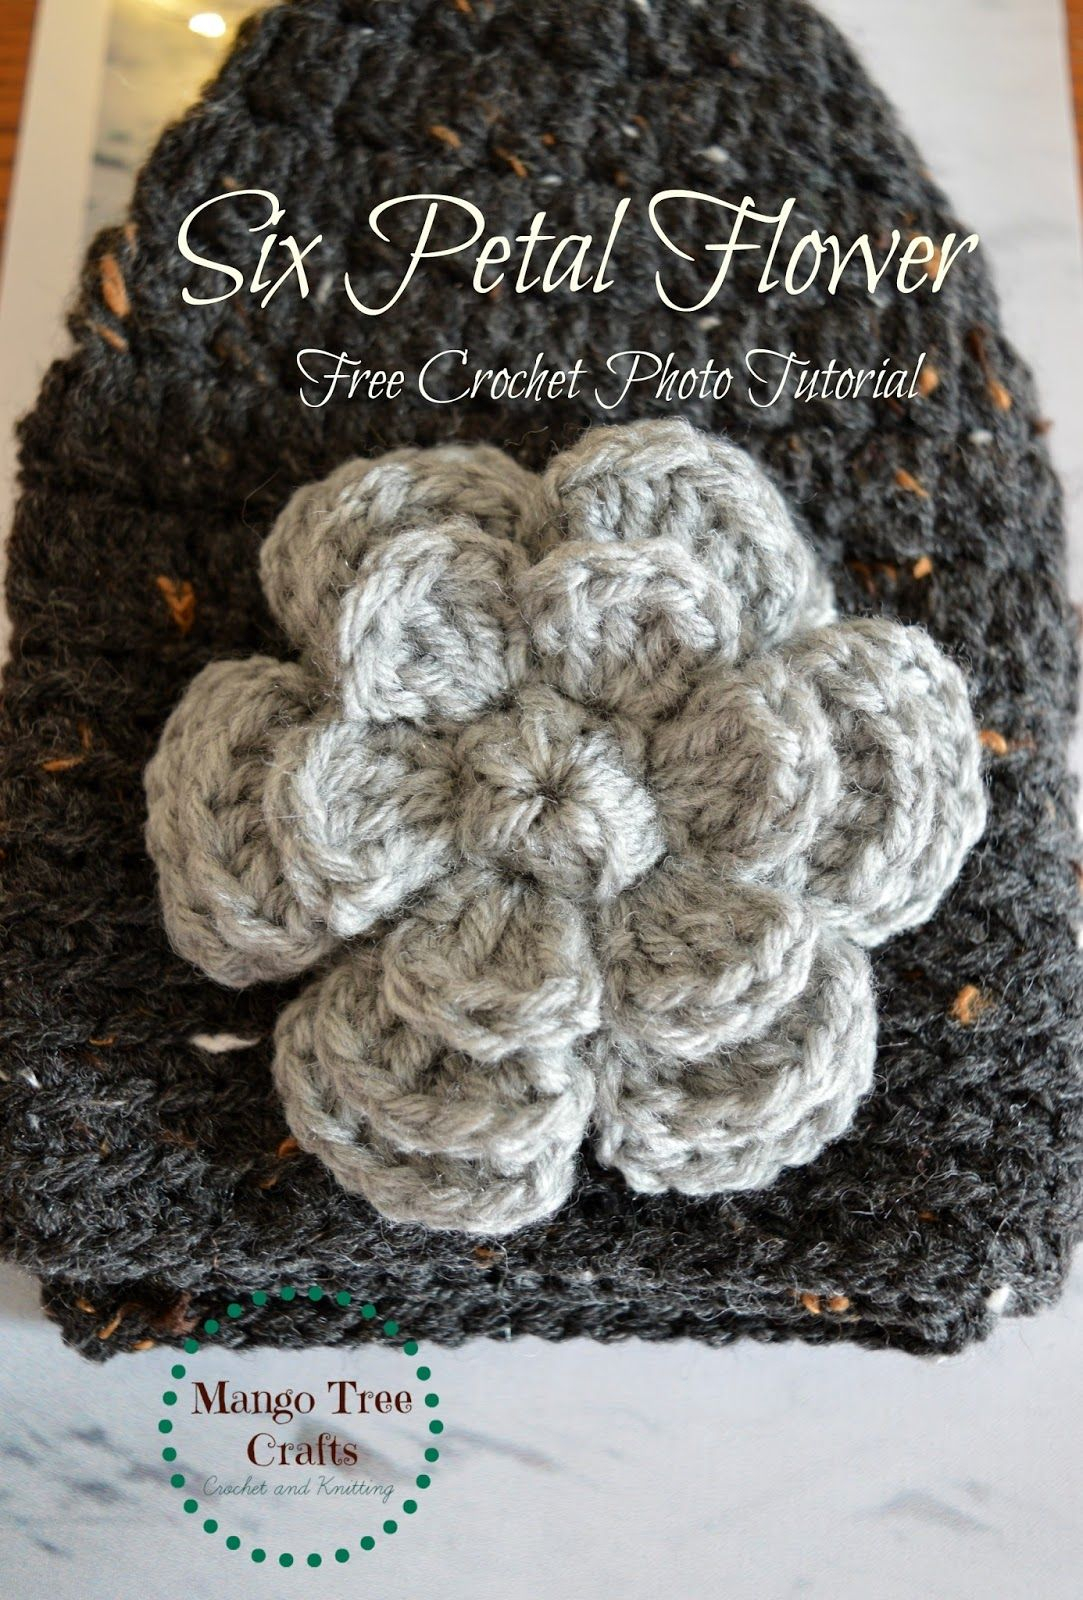 Crochet Sunflower Pattern Crochet Flower Free Pattern Crochet Pinterest Crochet Flower